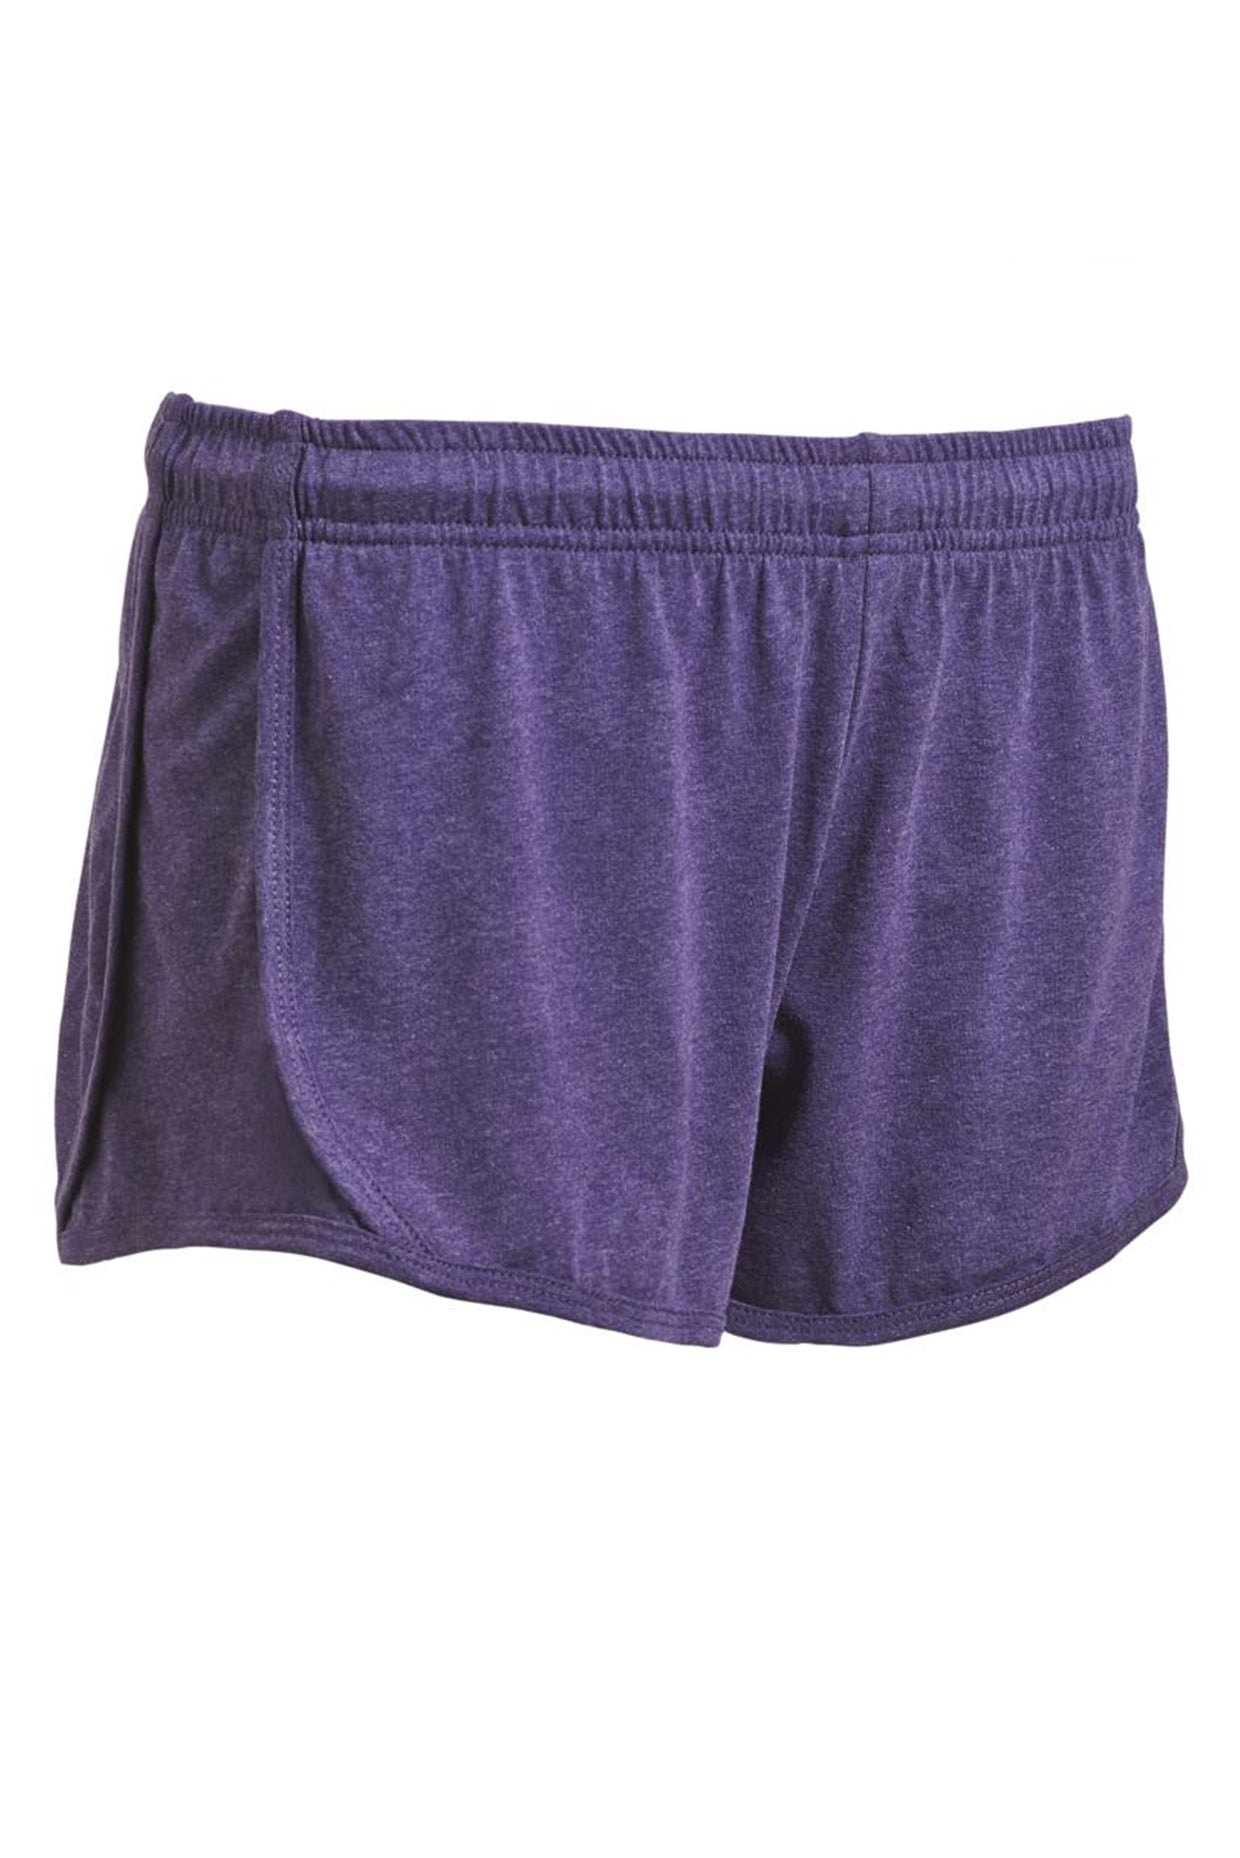 Expert Brand Retail Made in USA sportswear activewear women's shorts heather purple 2#color_dark-heather-purple